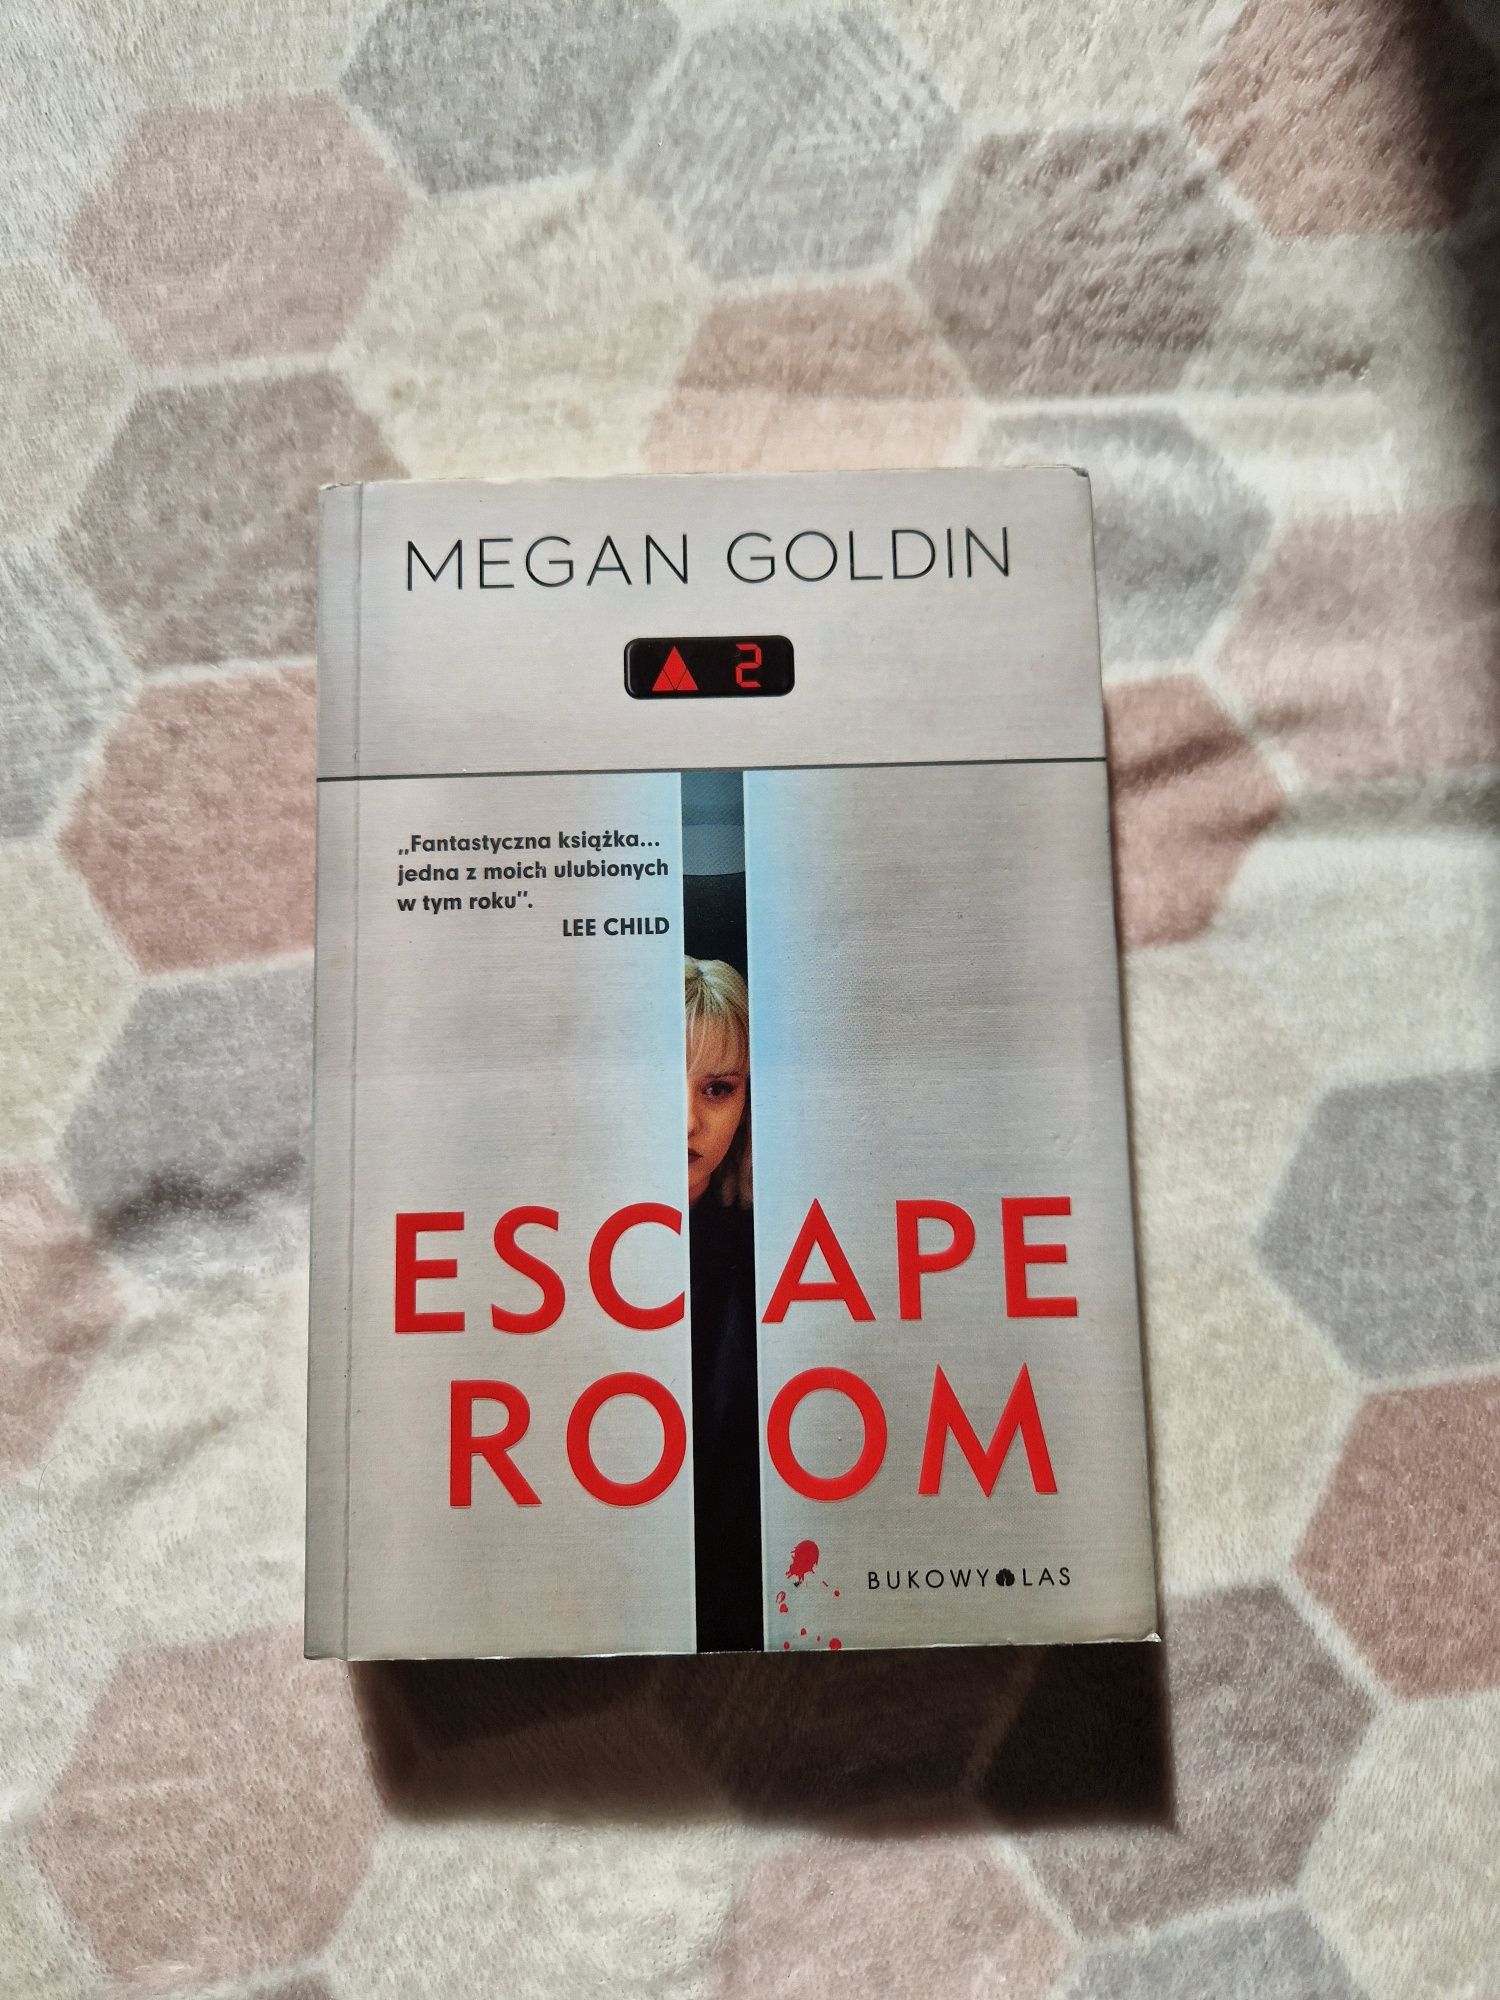 Książka "Escape room" Megan Goldin